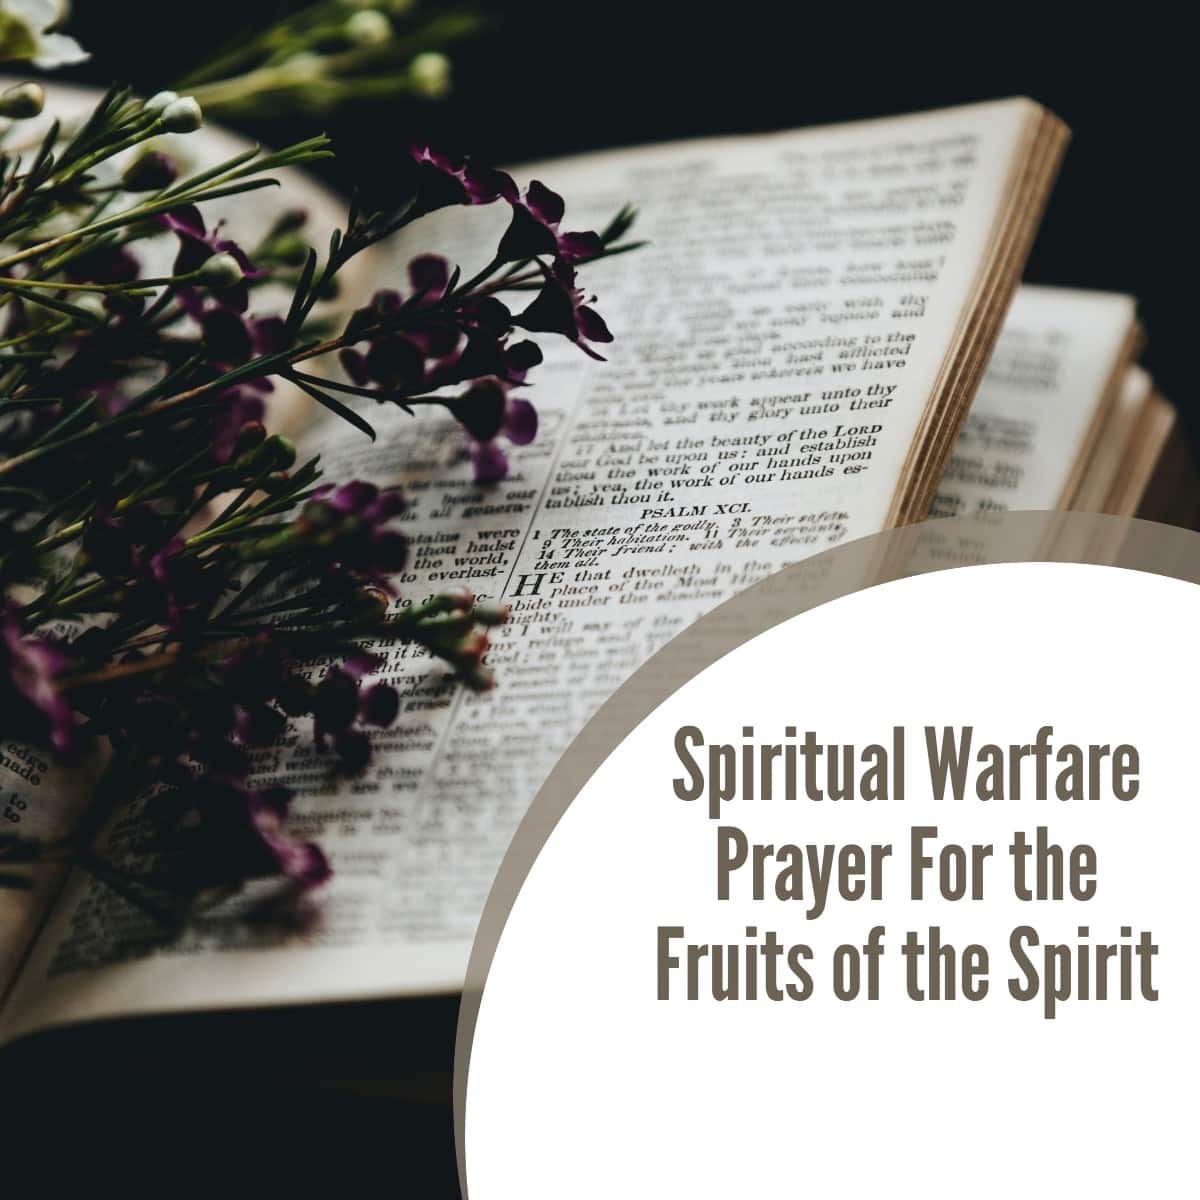 Spiritual Warfare Prayer For the Fruits of the Spirit